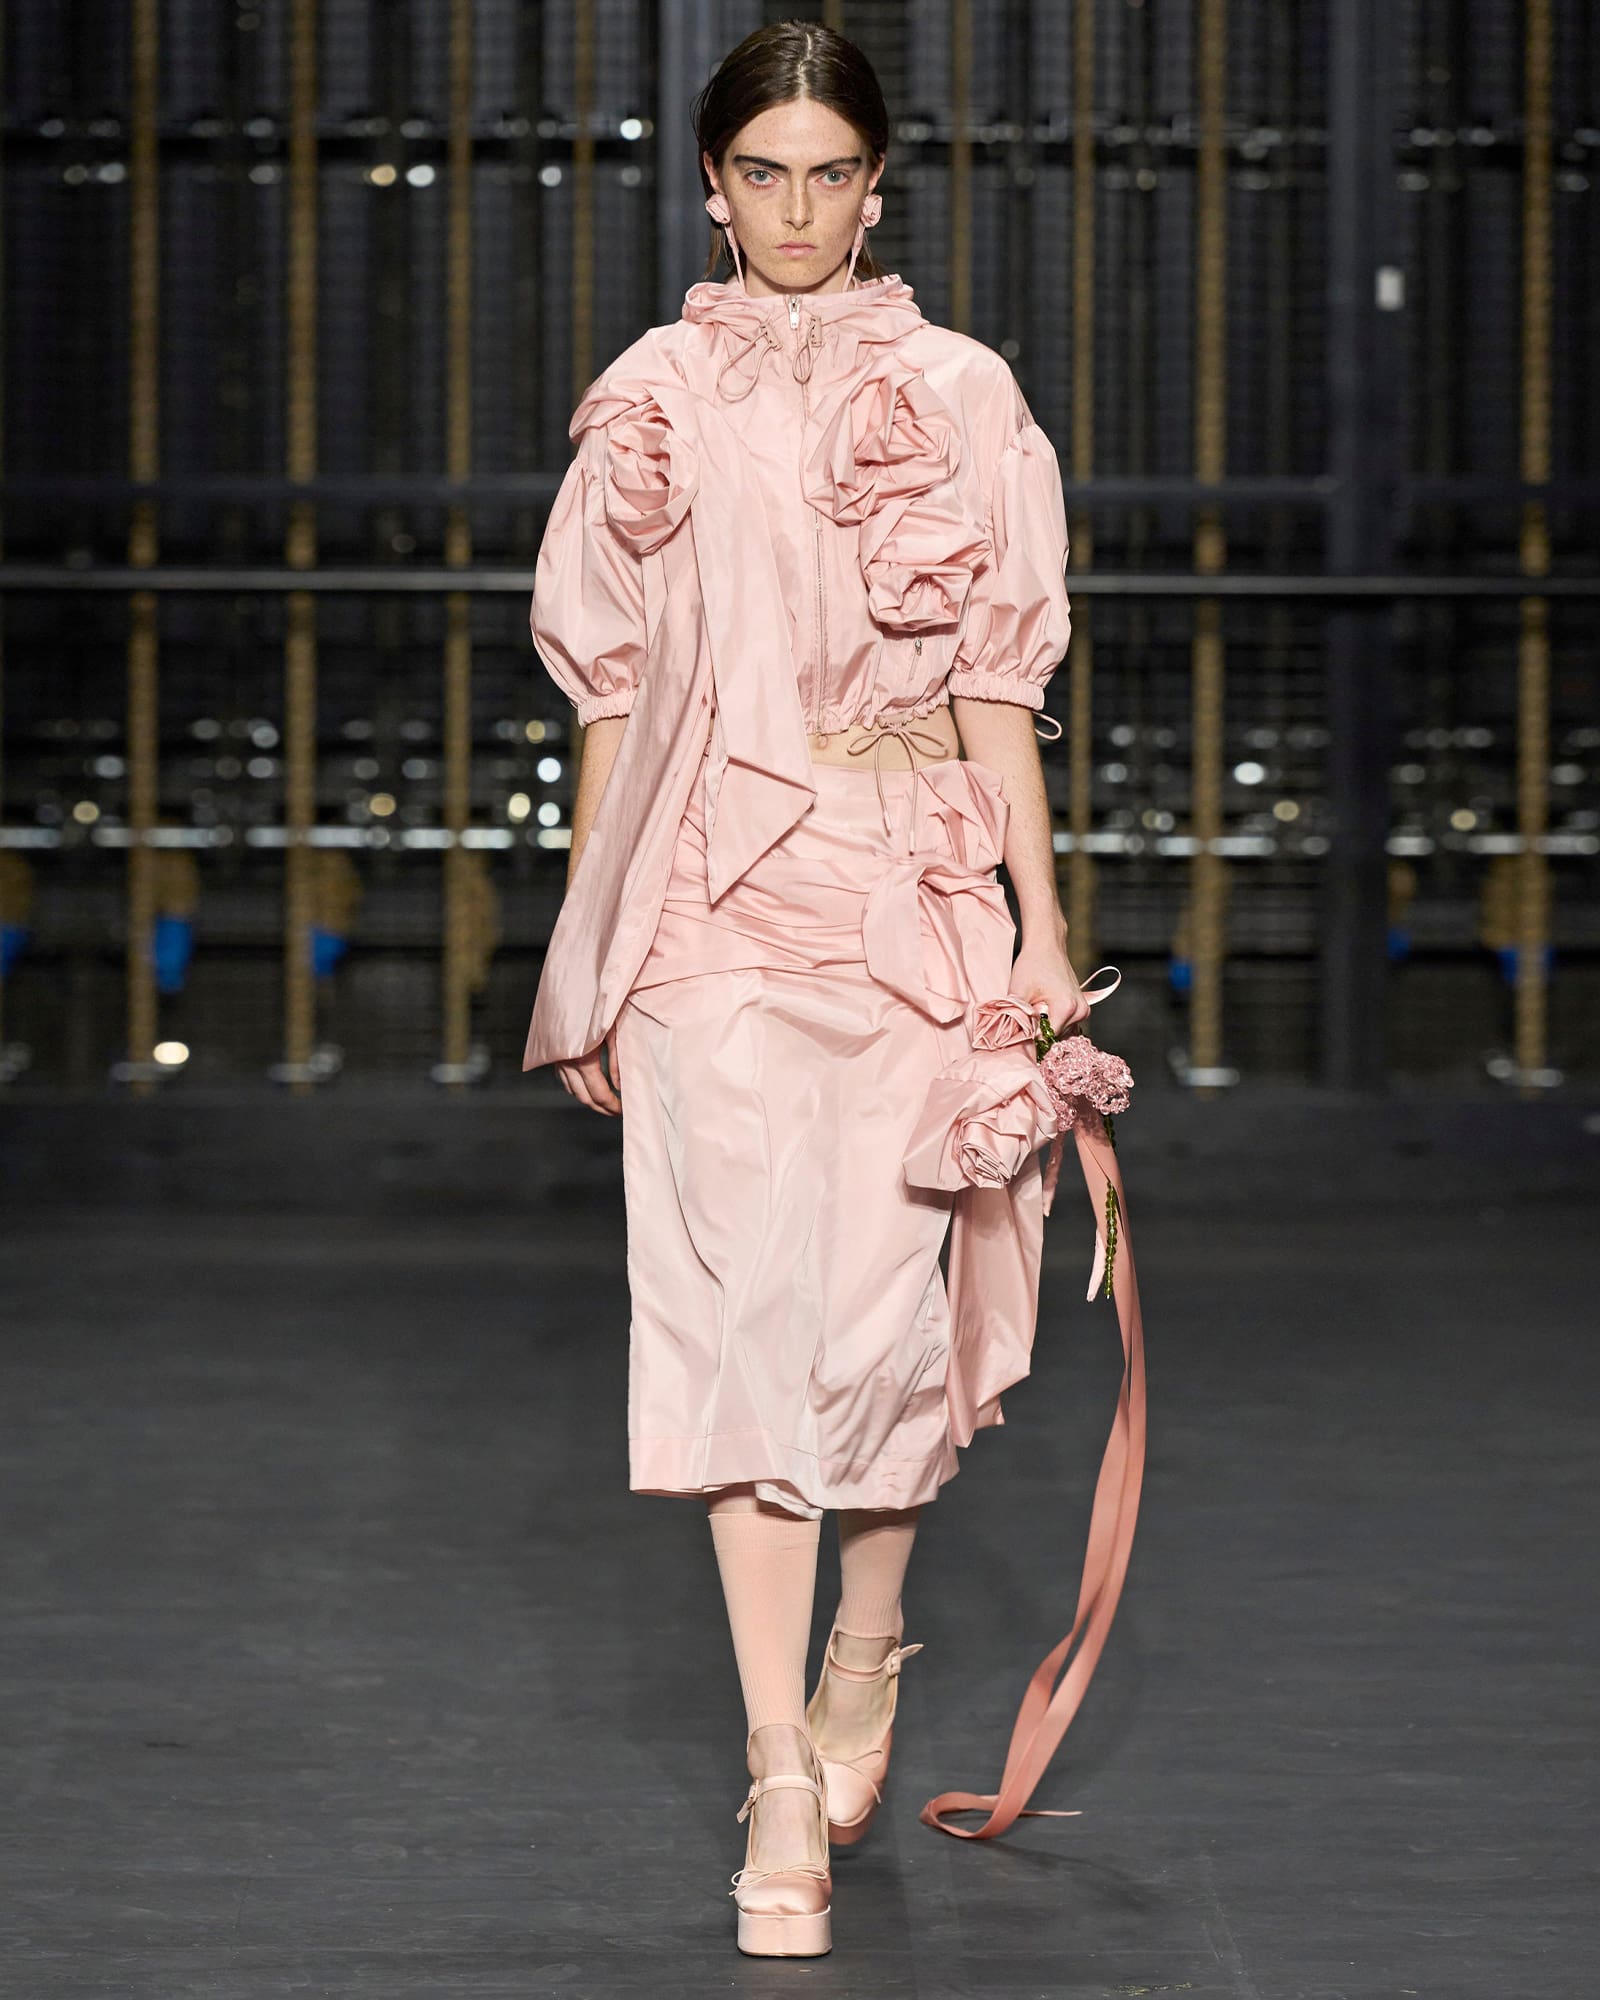 Pink ruffle dress by Simone Rocha